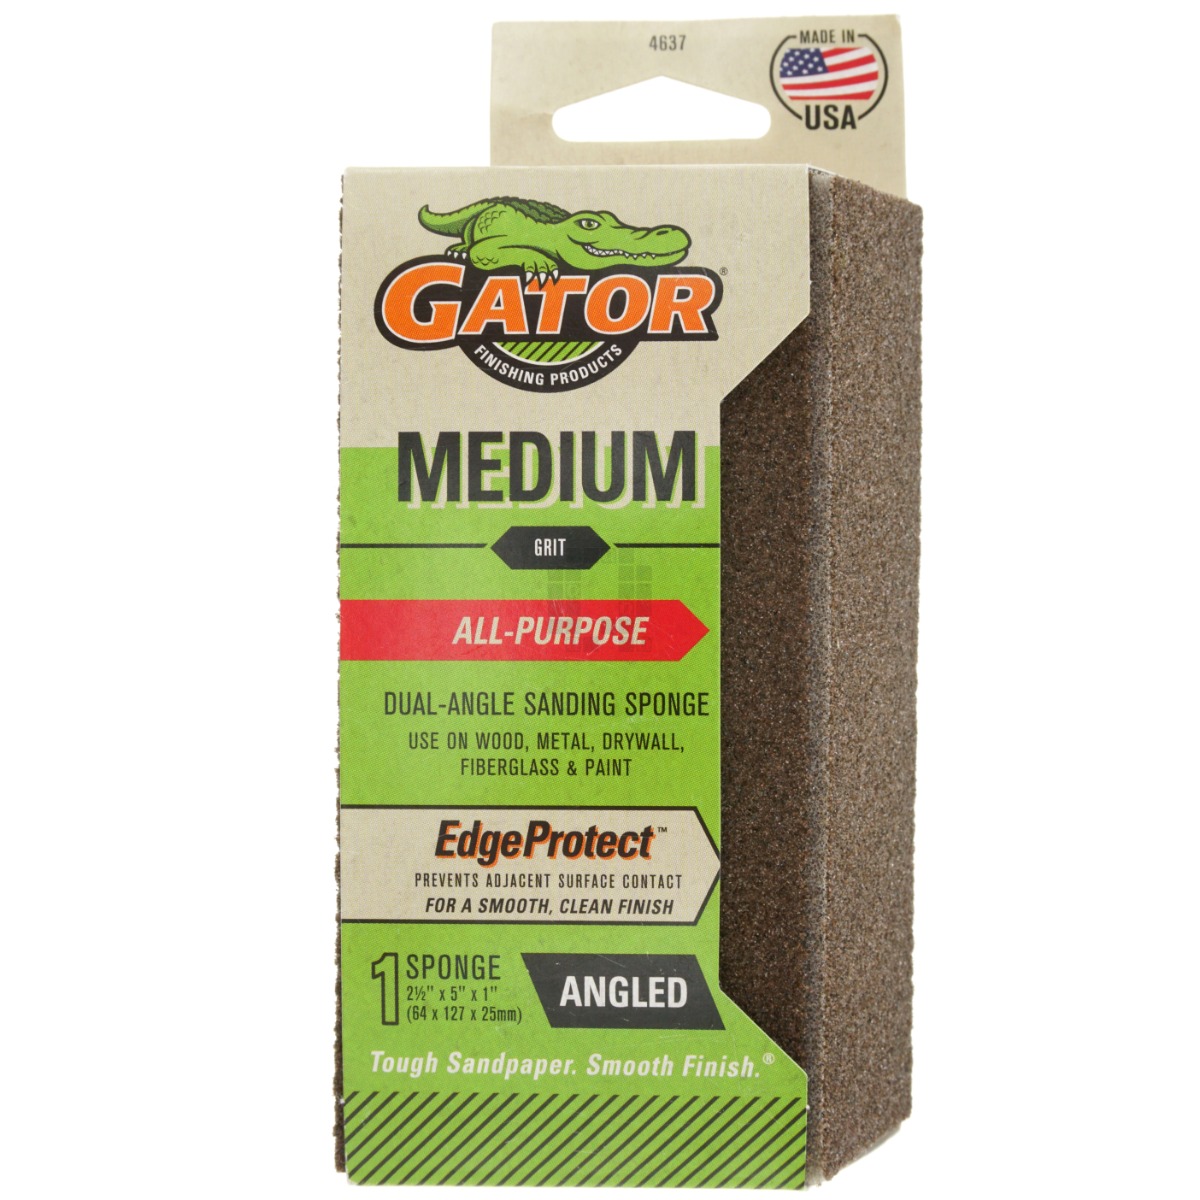 Gator 4637 All-Purpose EdgeProtect Dual-Angle Sanding Sponge, Medium Grit